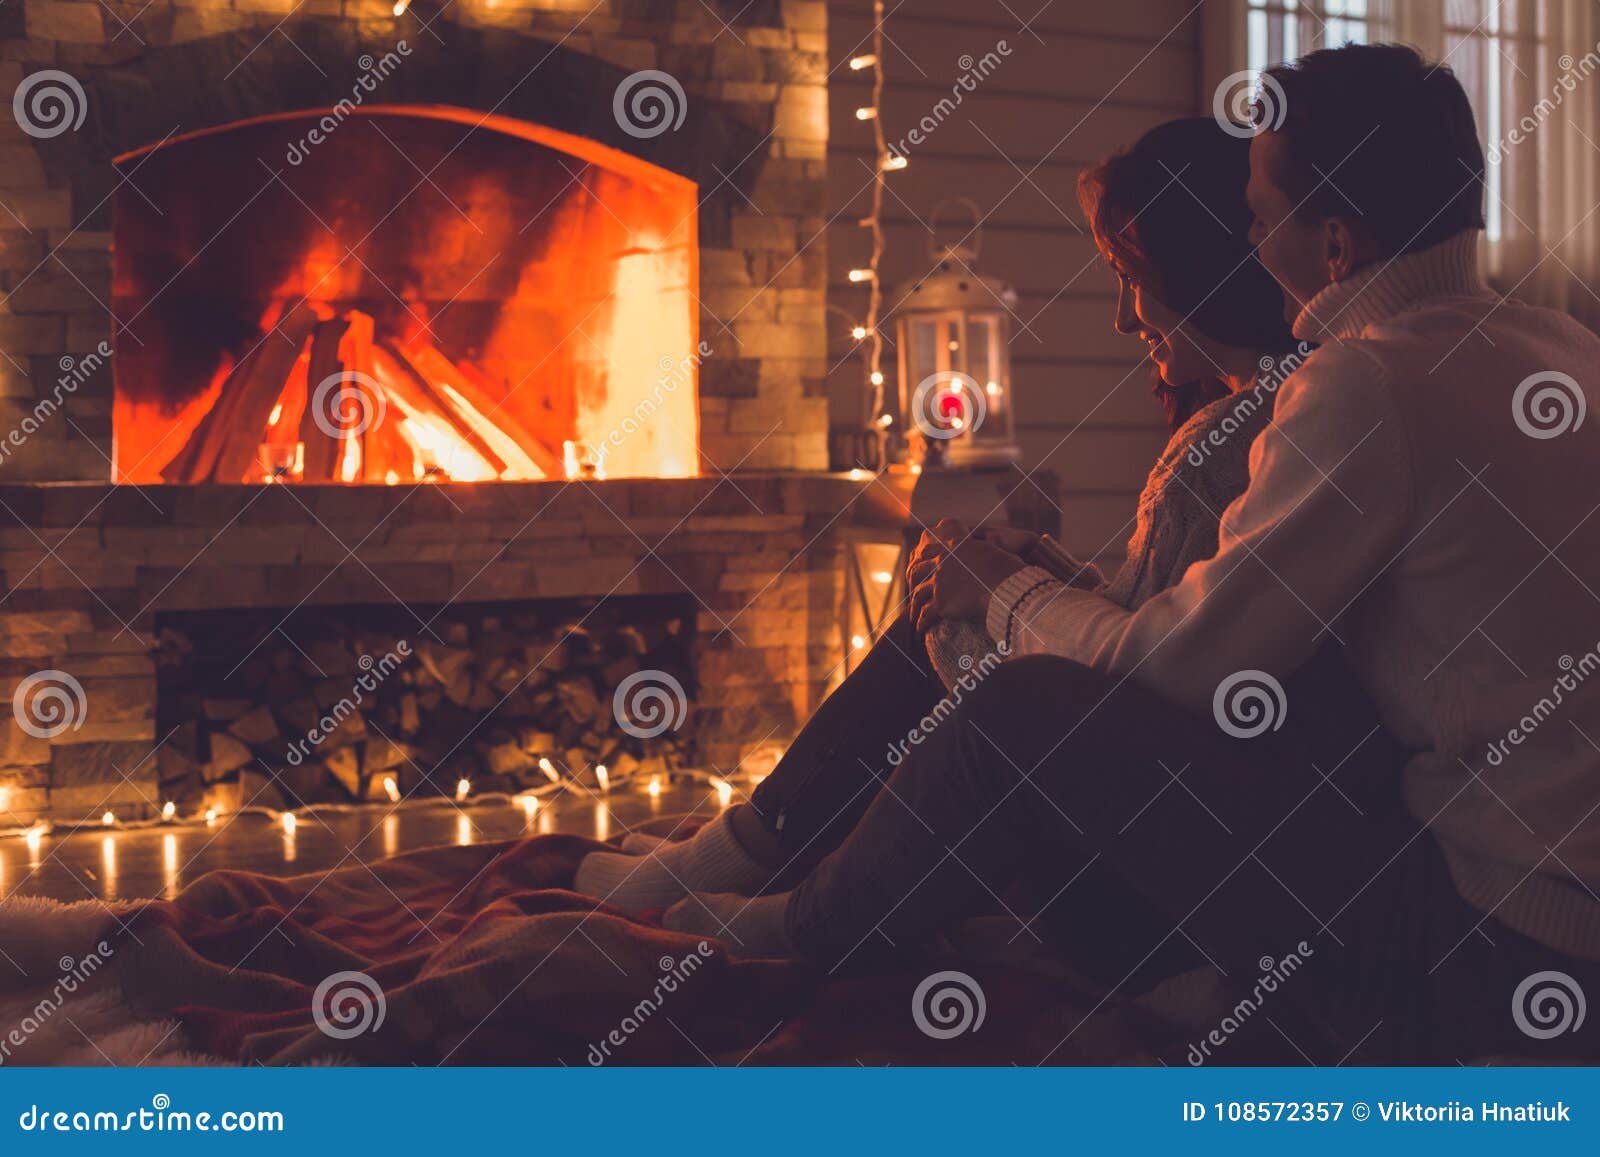 Threesome near fireplace